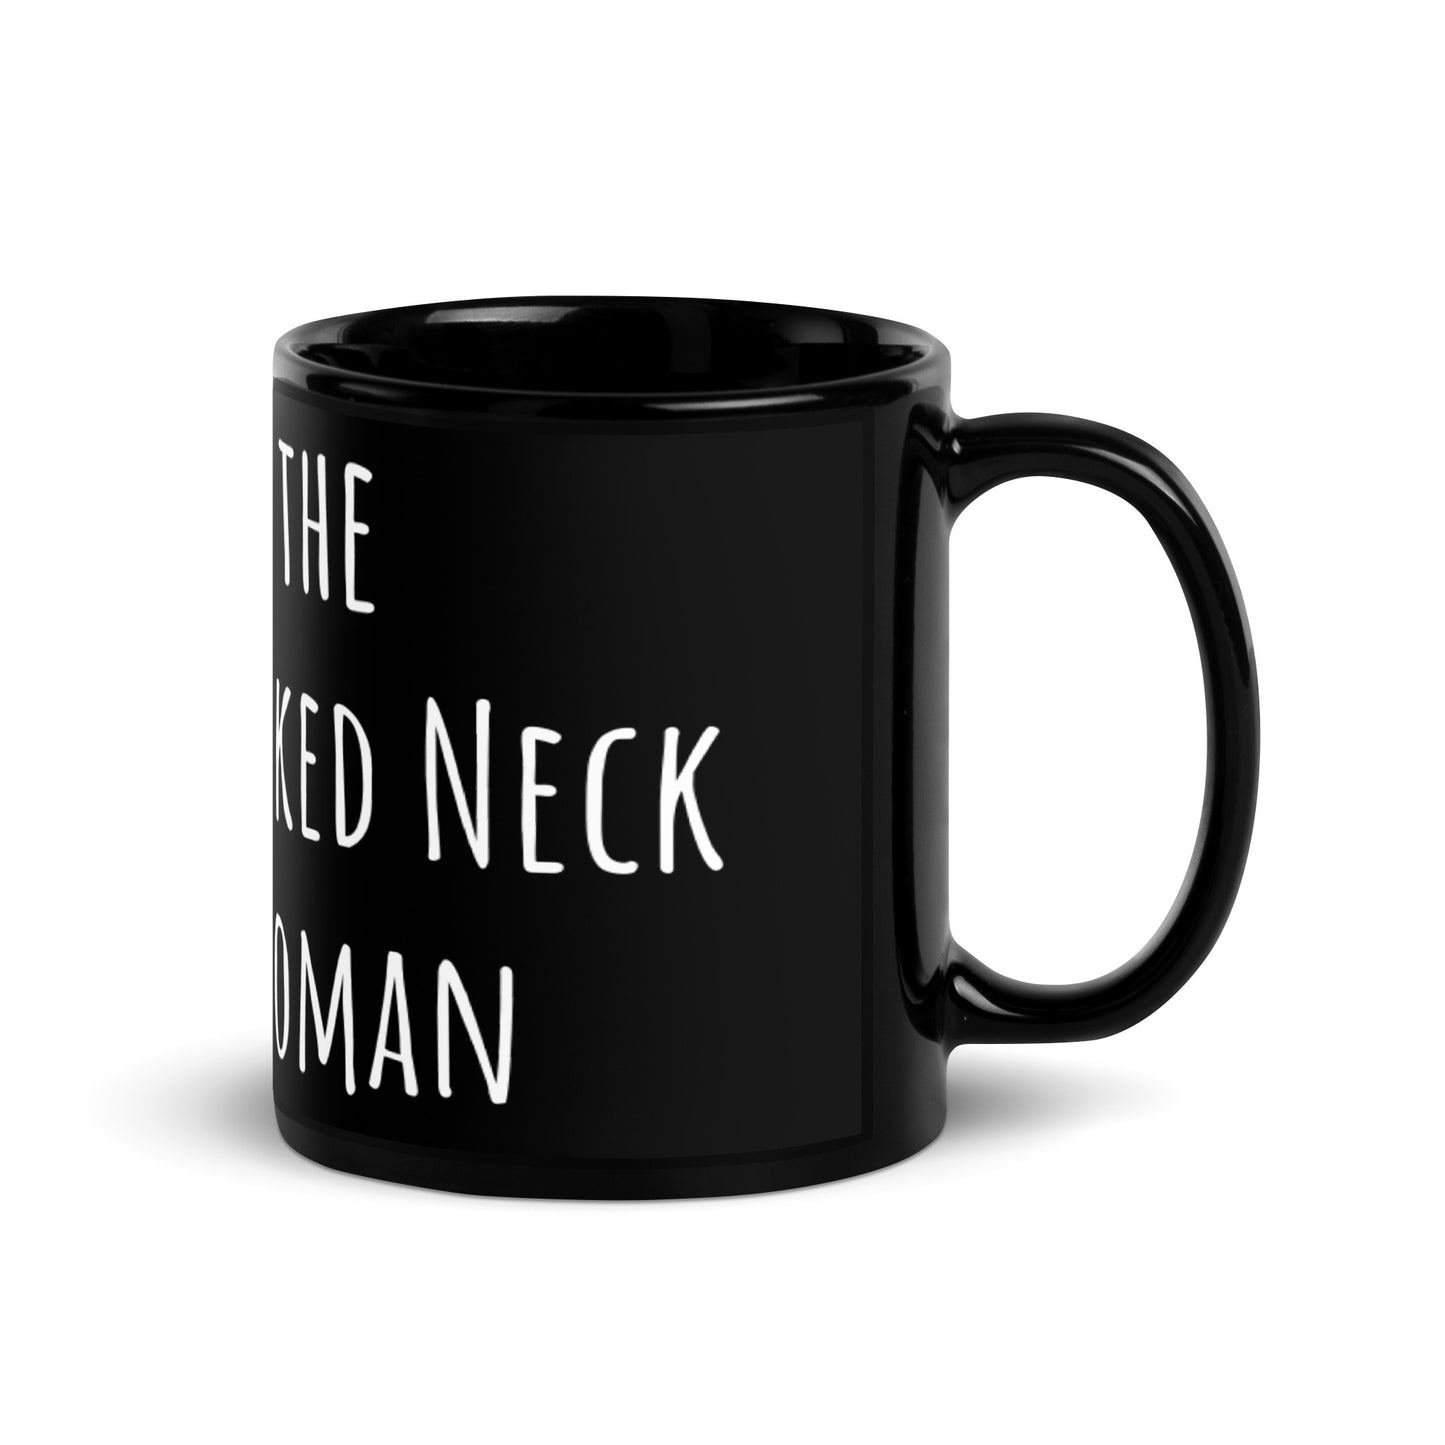 Crooked Neck Woman Mug